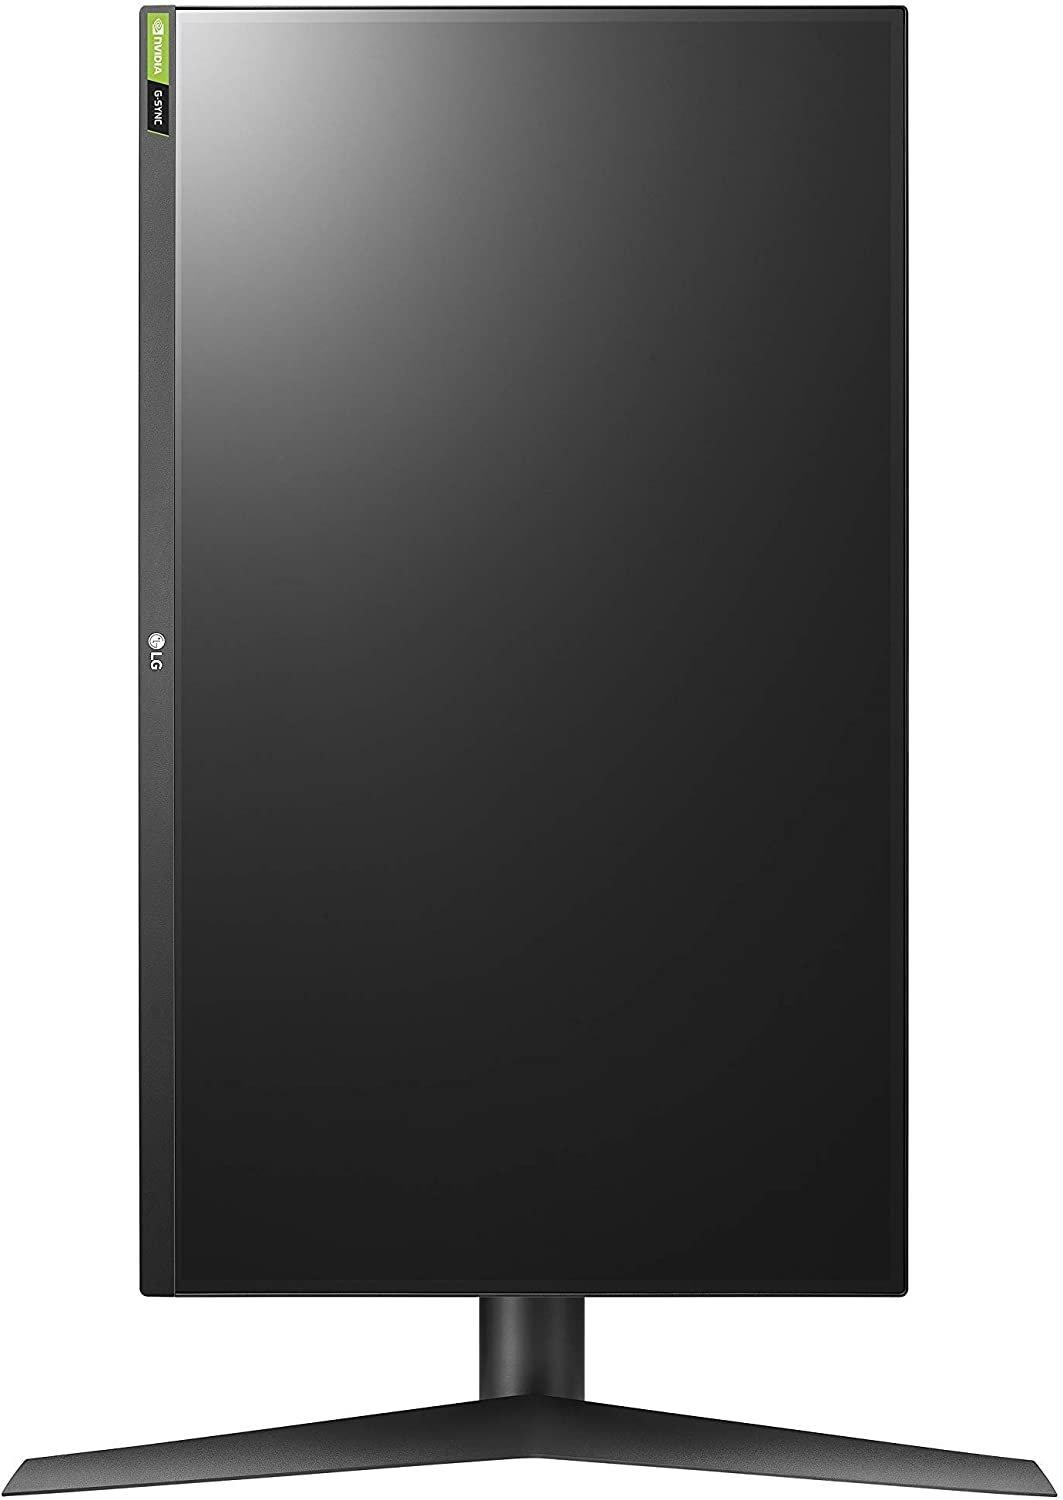 LG UltraGear 27GP850-B.BEK Quad HD 27 Nano IPS LCD Gaming Monitor - Black